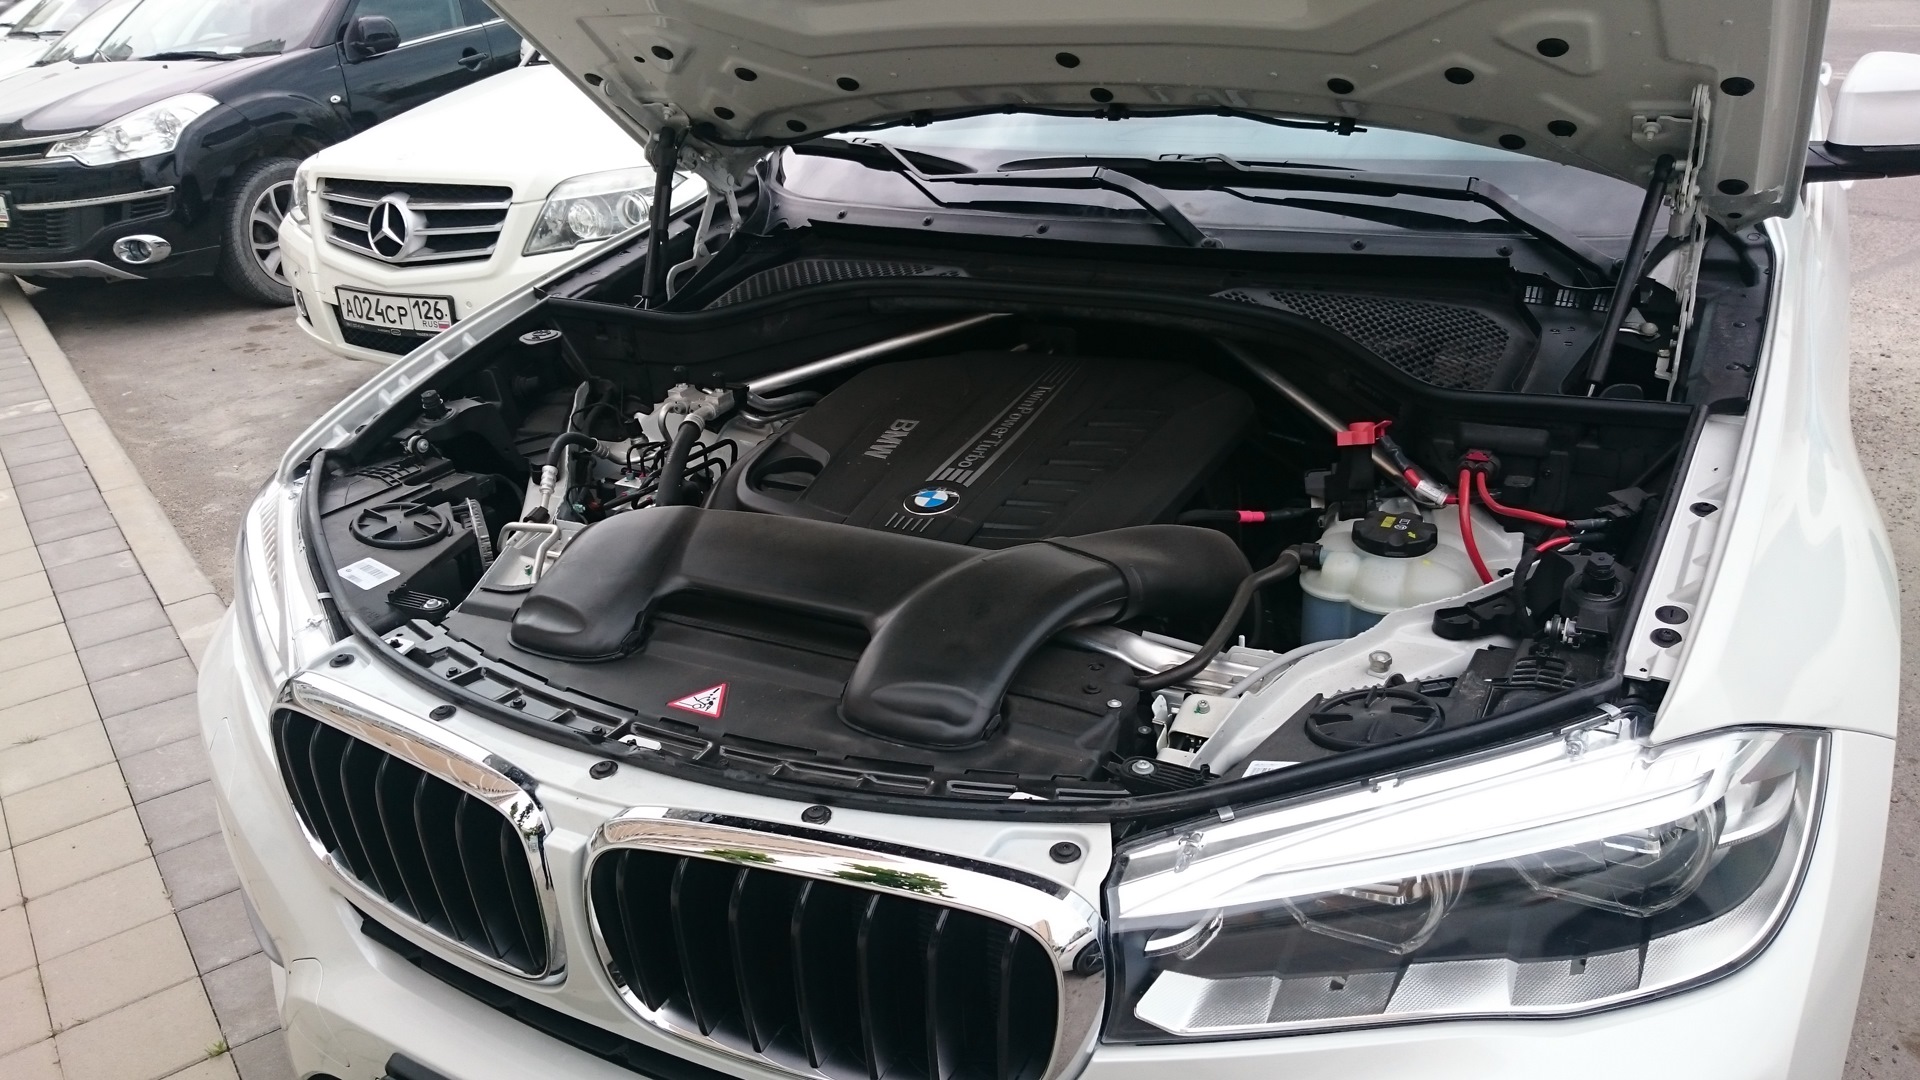 Замена капота бмв. BMW x6 f мотор. BMW x6 f16 под капотом. Подкапотное пространство BMW x6 f16. BMW x5 g05 под капотом.